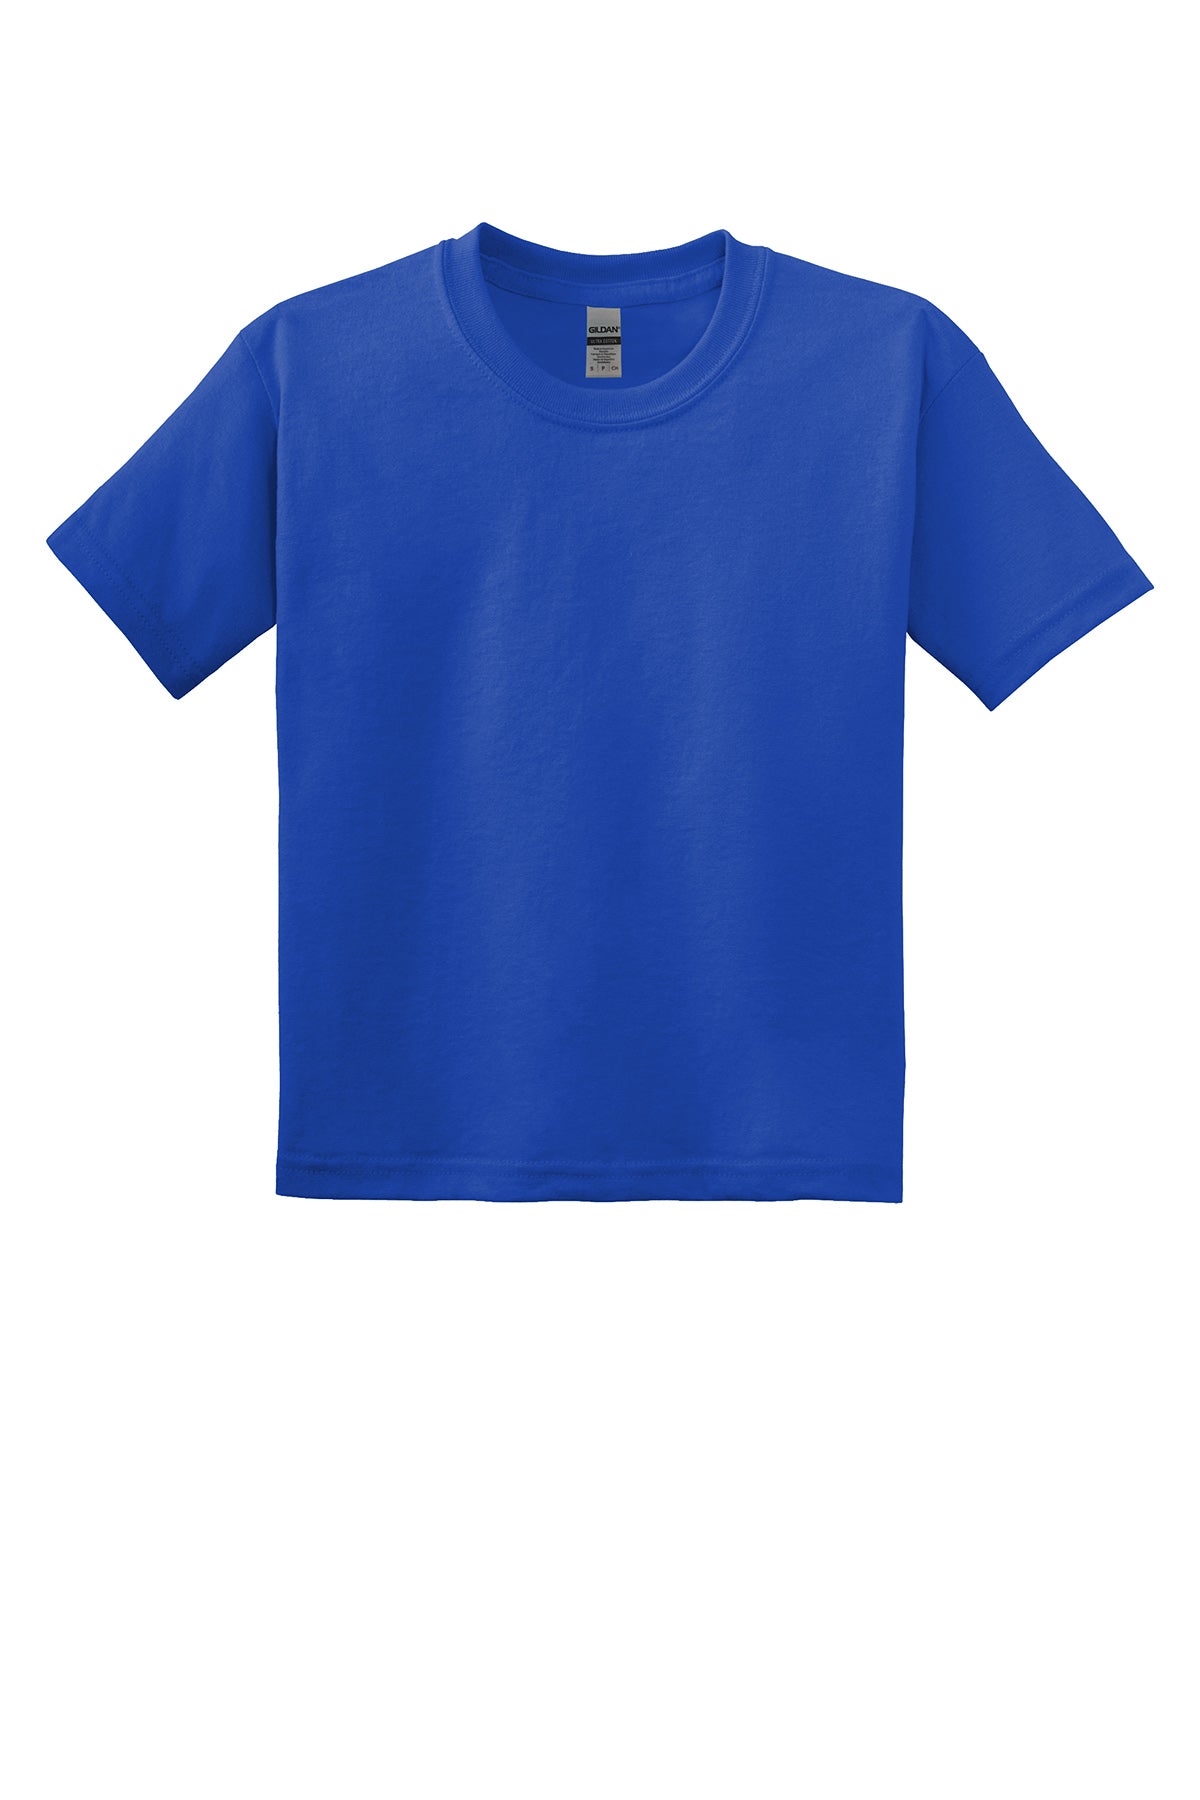 Gildan 8000B Youth Dryblend T-Shirt Yth Small / Royal